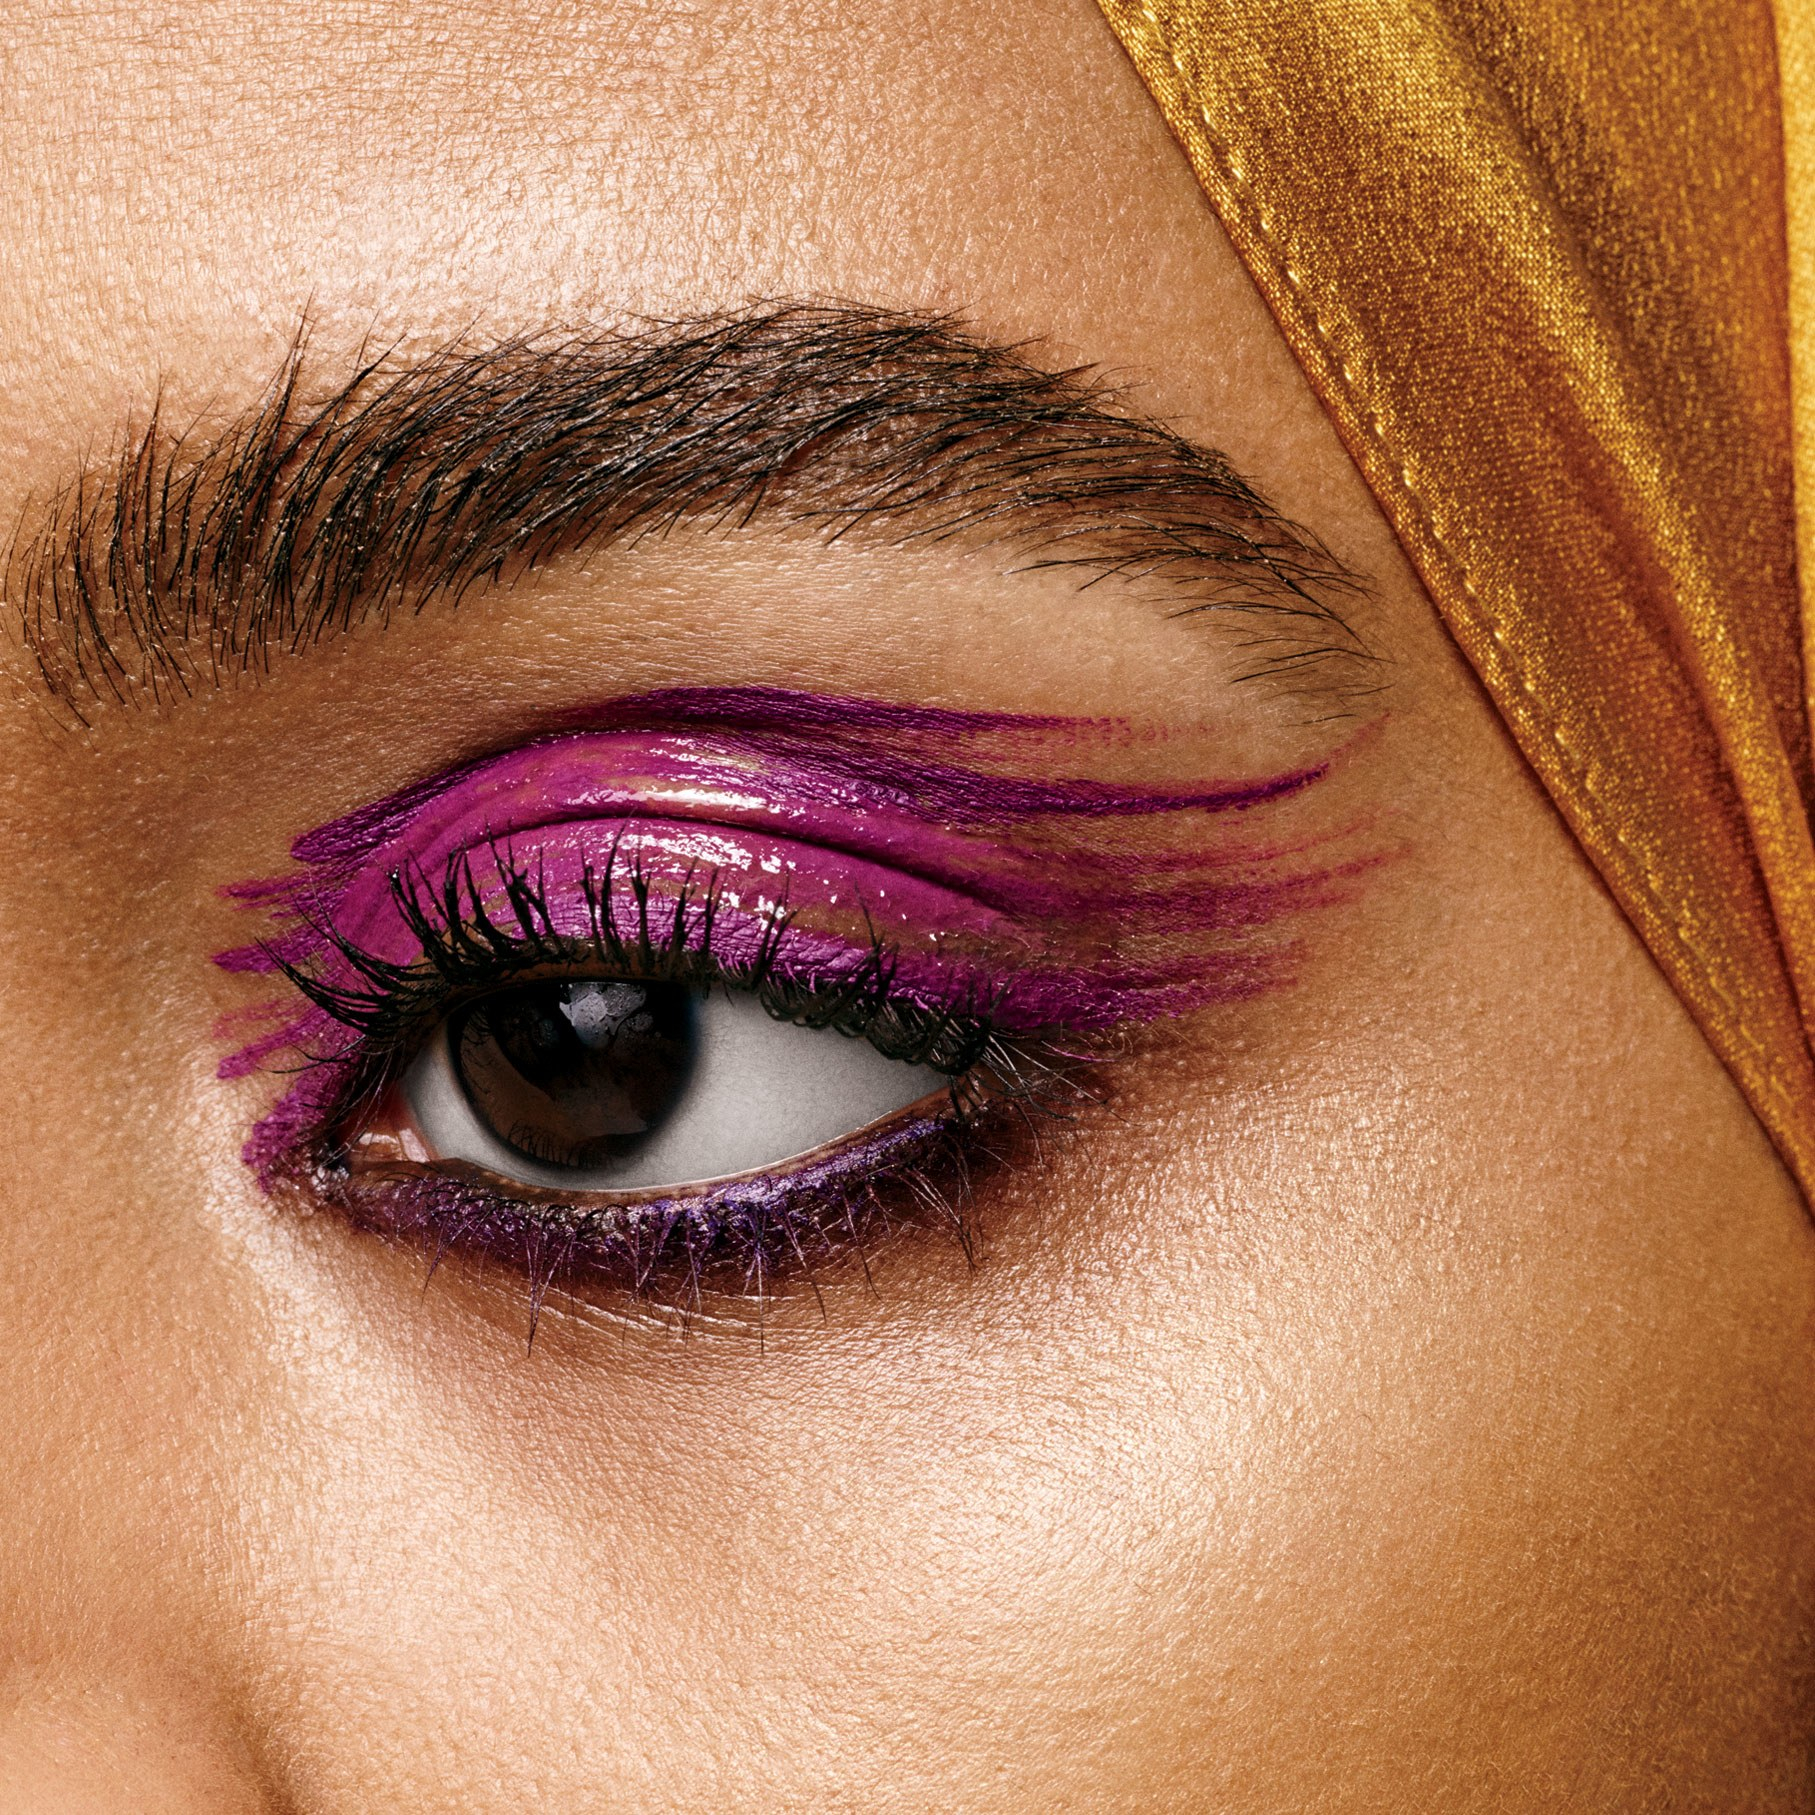 Muslim Eye Makeup One Muslim Woman Shares Her Stance On Makeup Teen Vogue